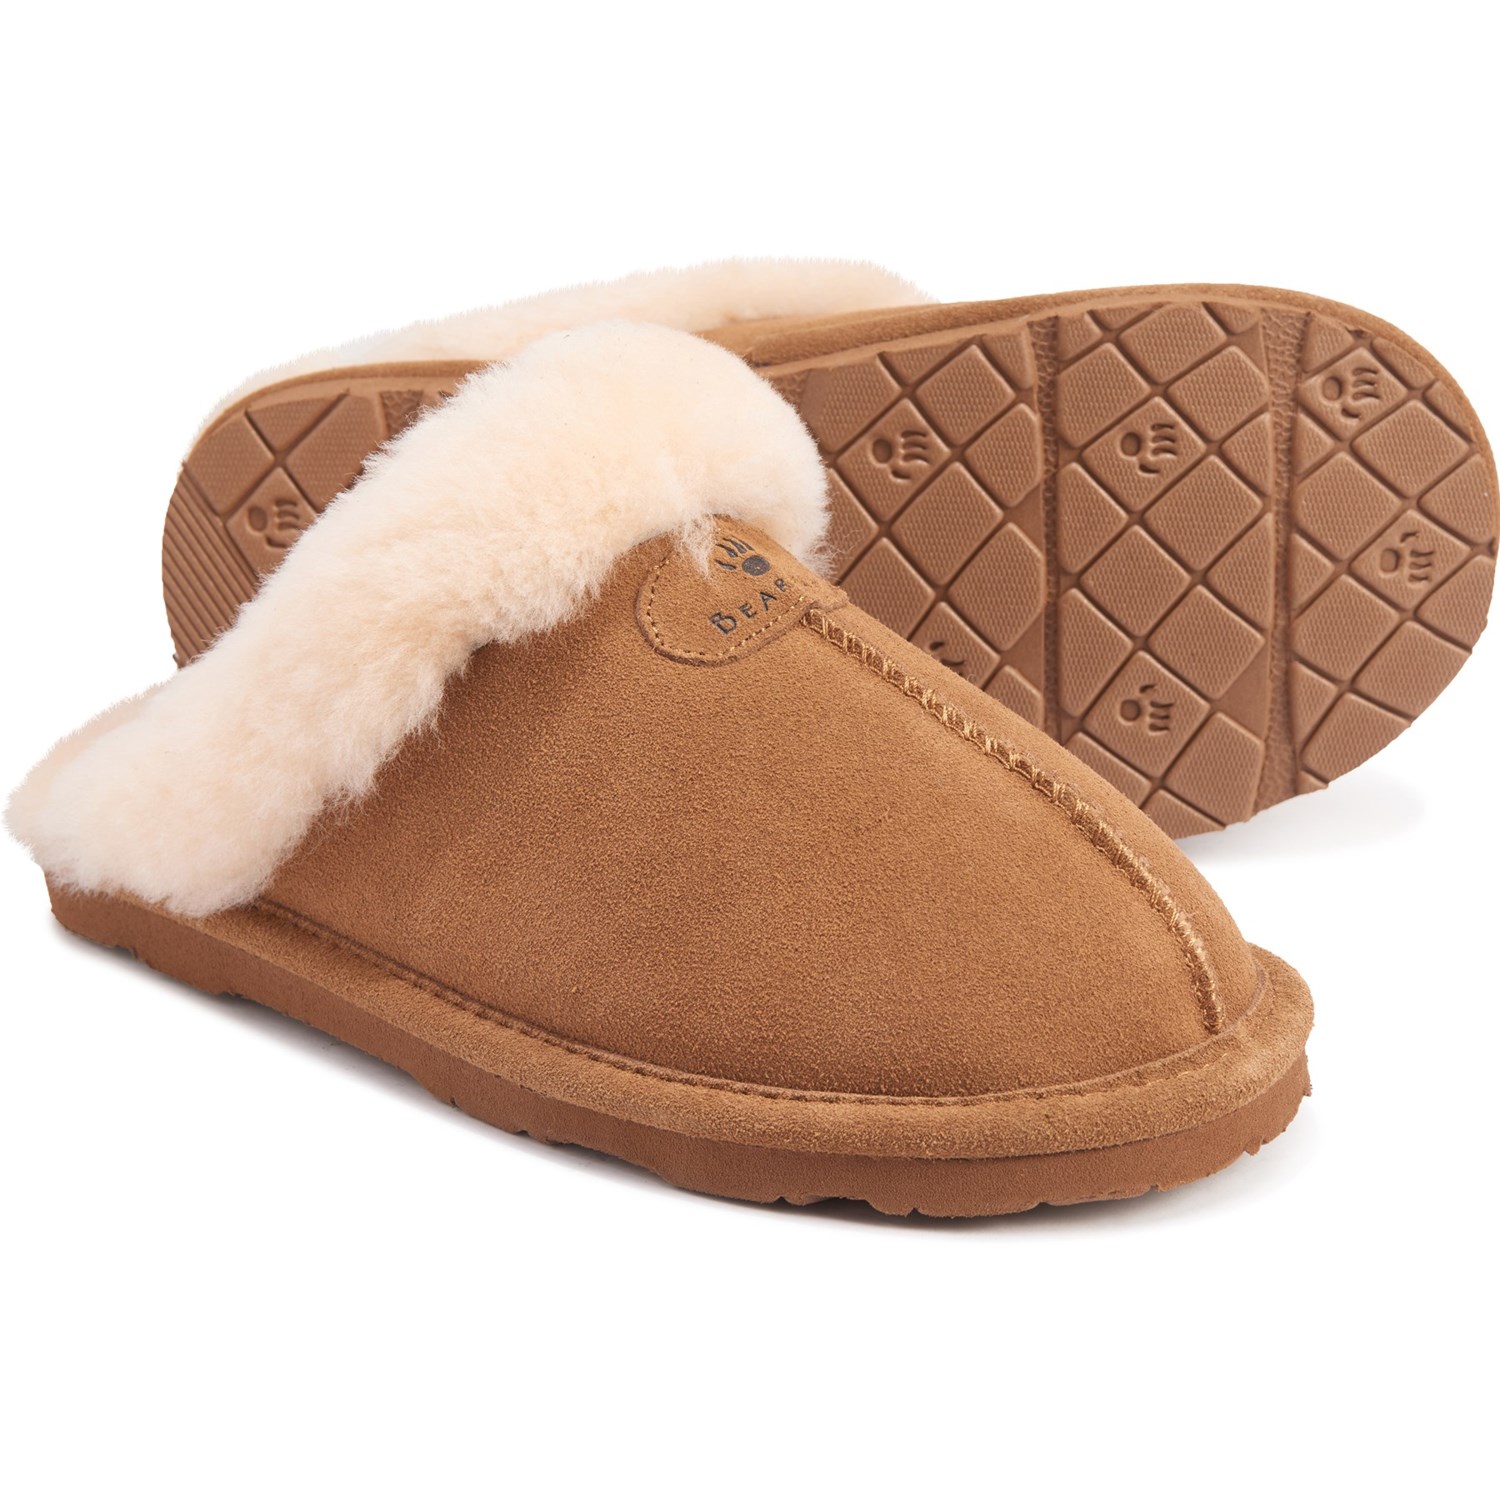 loki bearpaw slippers